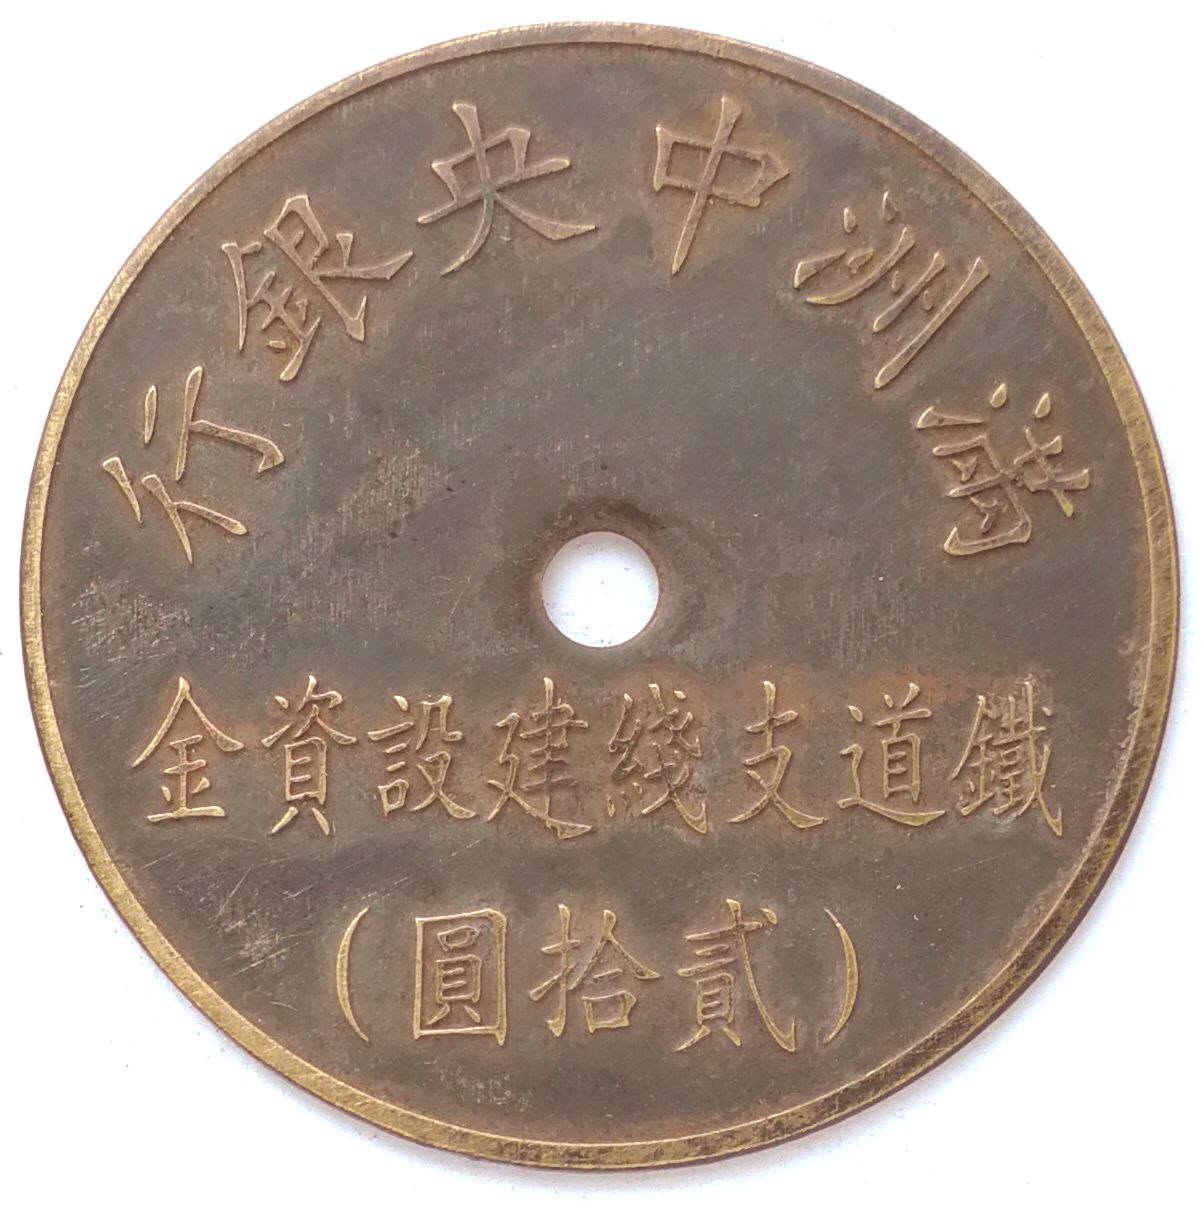 BT562, Railway Branch Line Construction Fund, Manchukuo Token, 20 Yen, China 1944